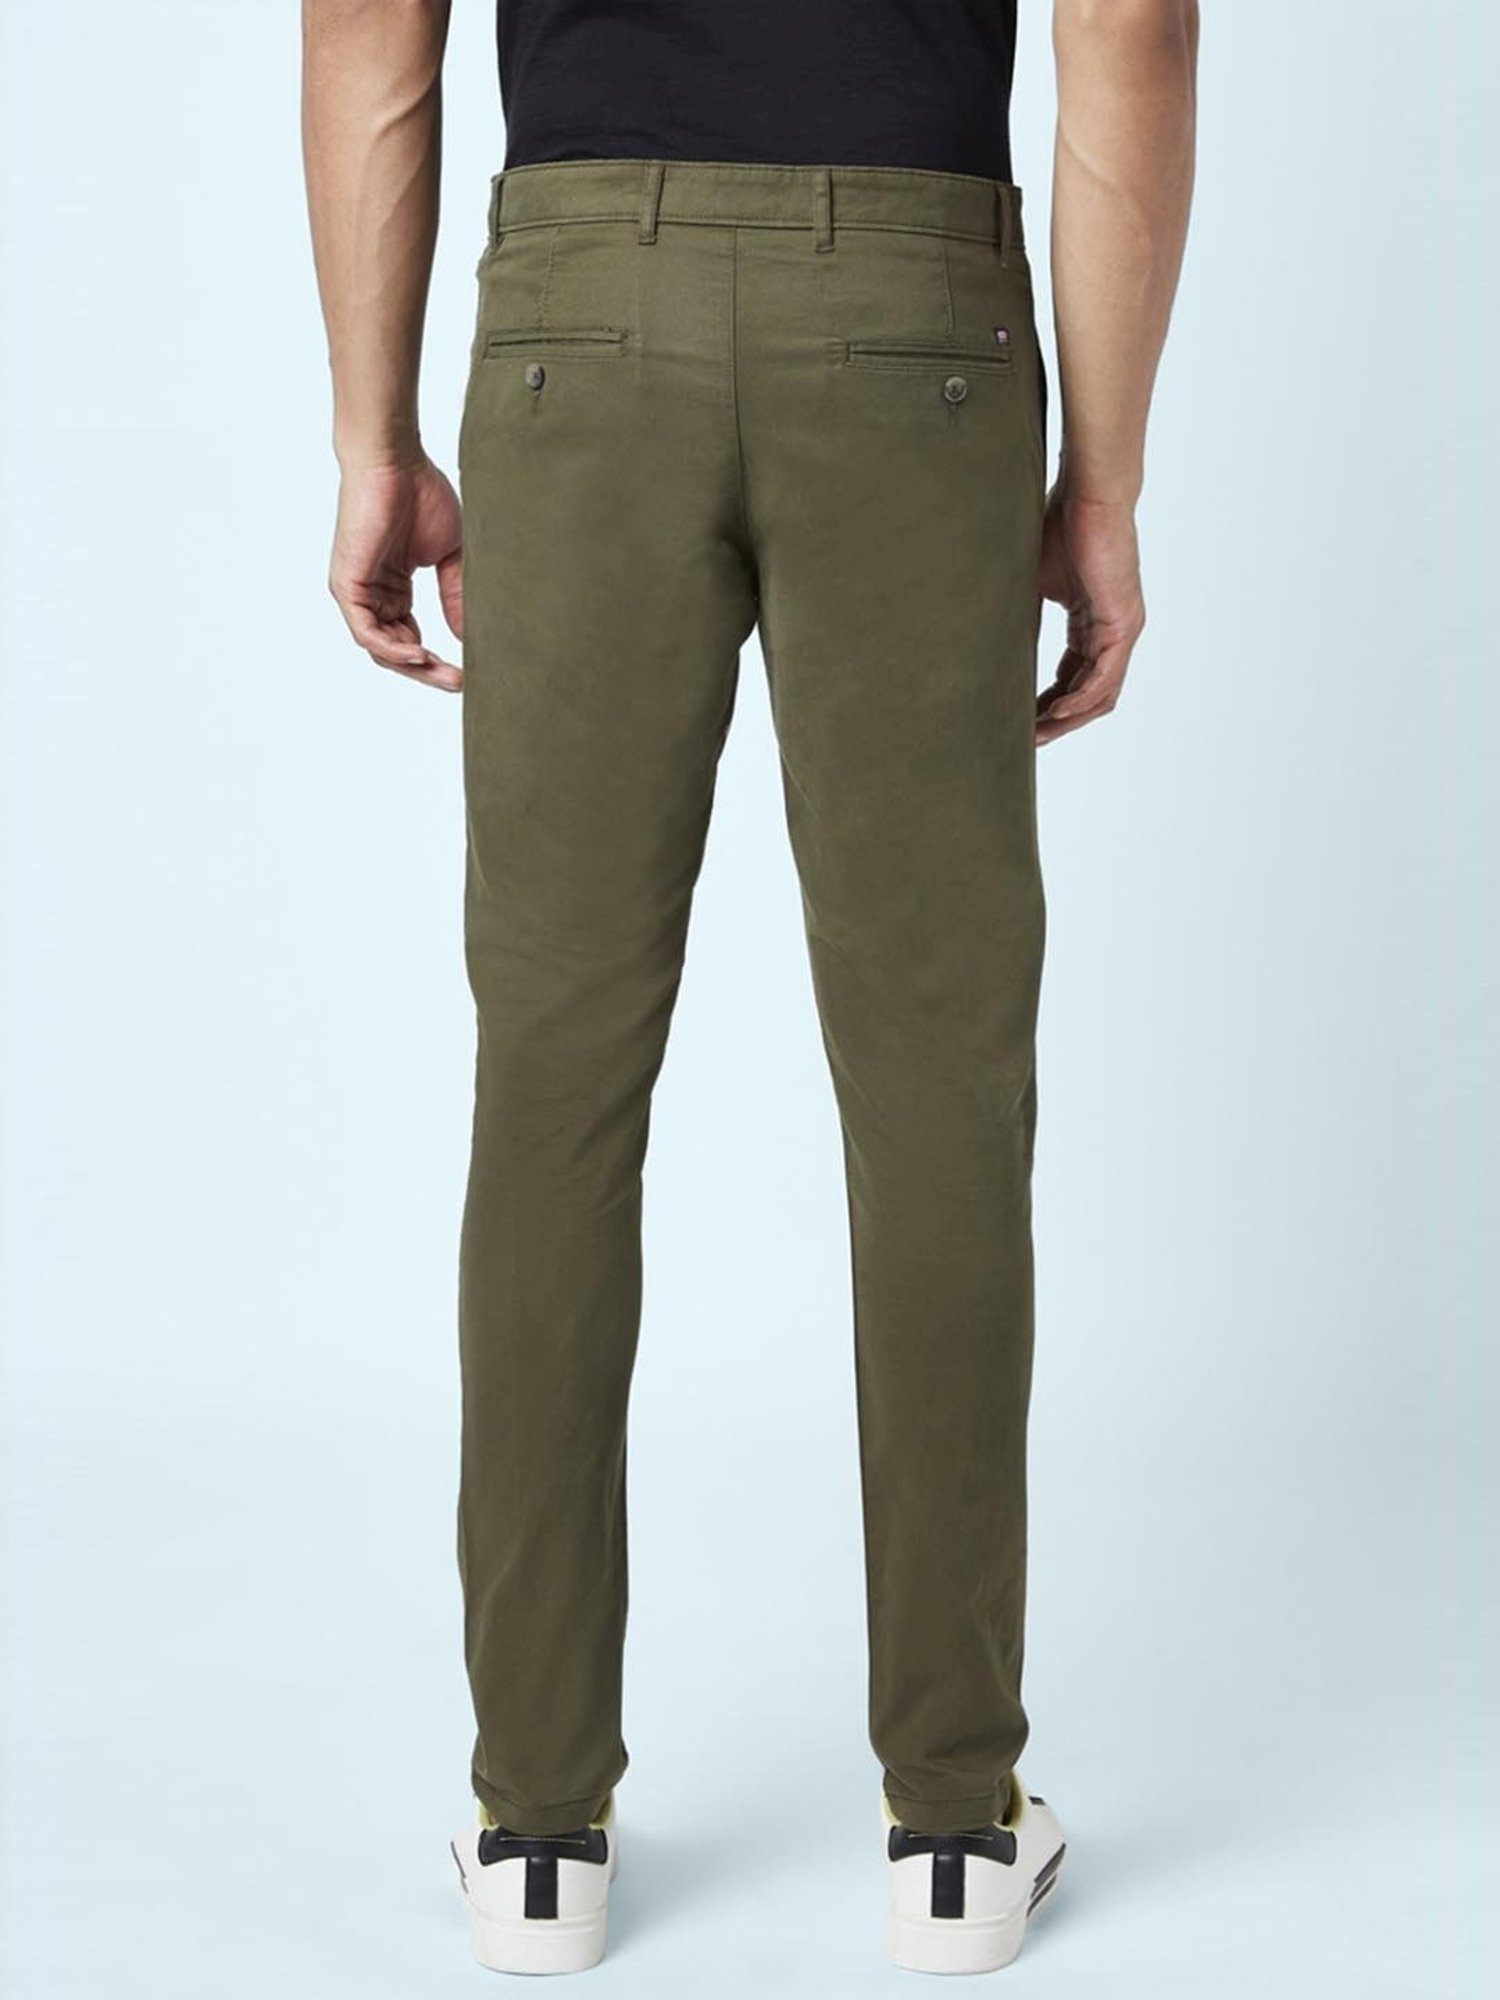 Jeans & Pants | Byford Cream Cotton Pant (Men) | Freeup